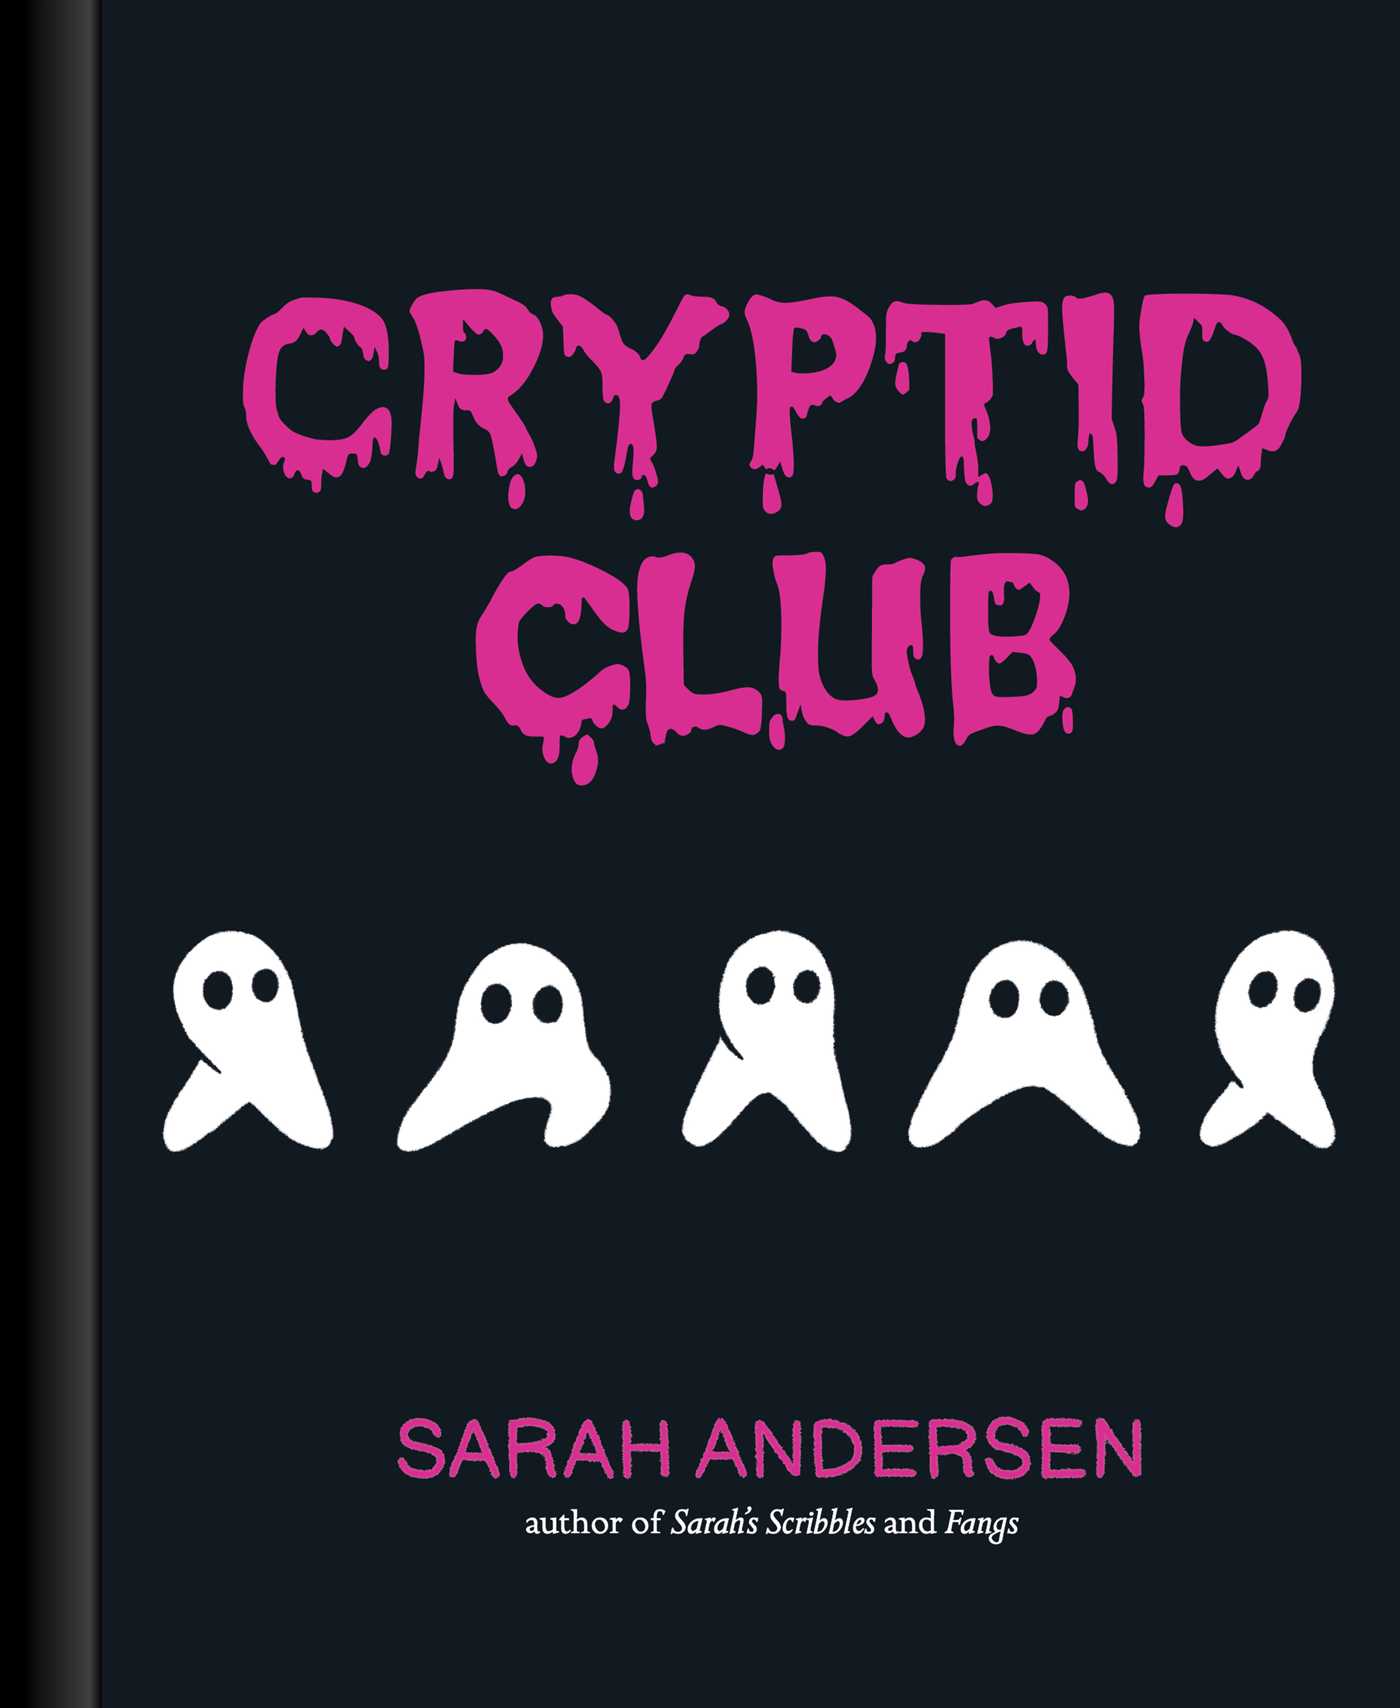 'Cryptid Club' by Sarah Andersen.